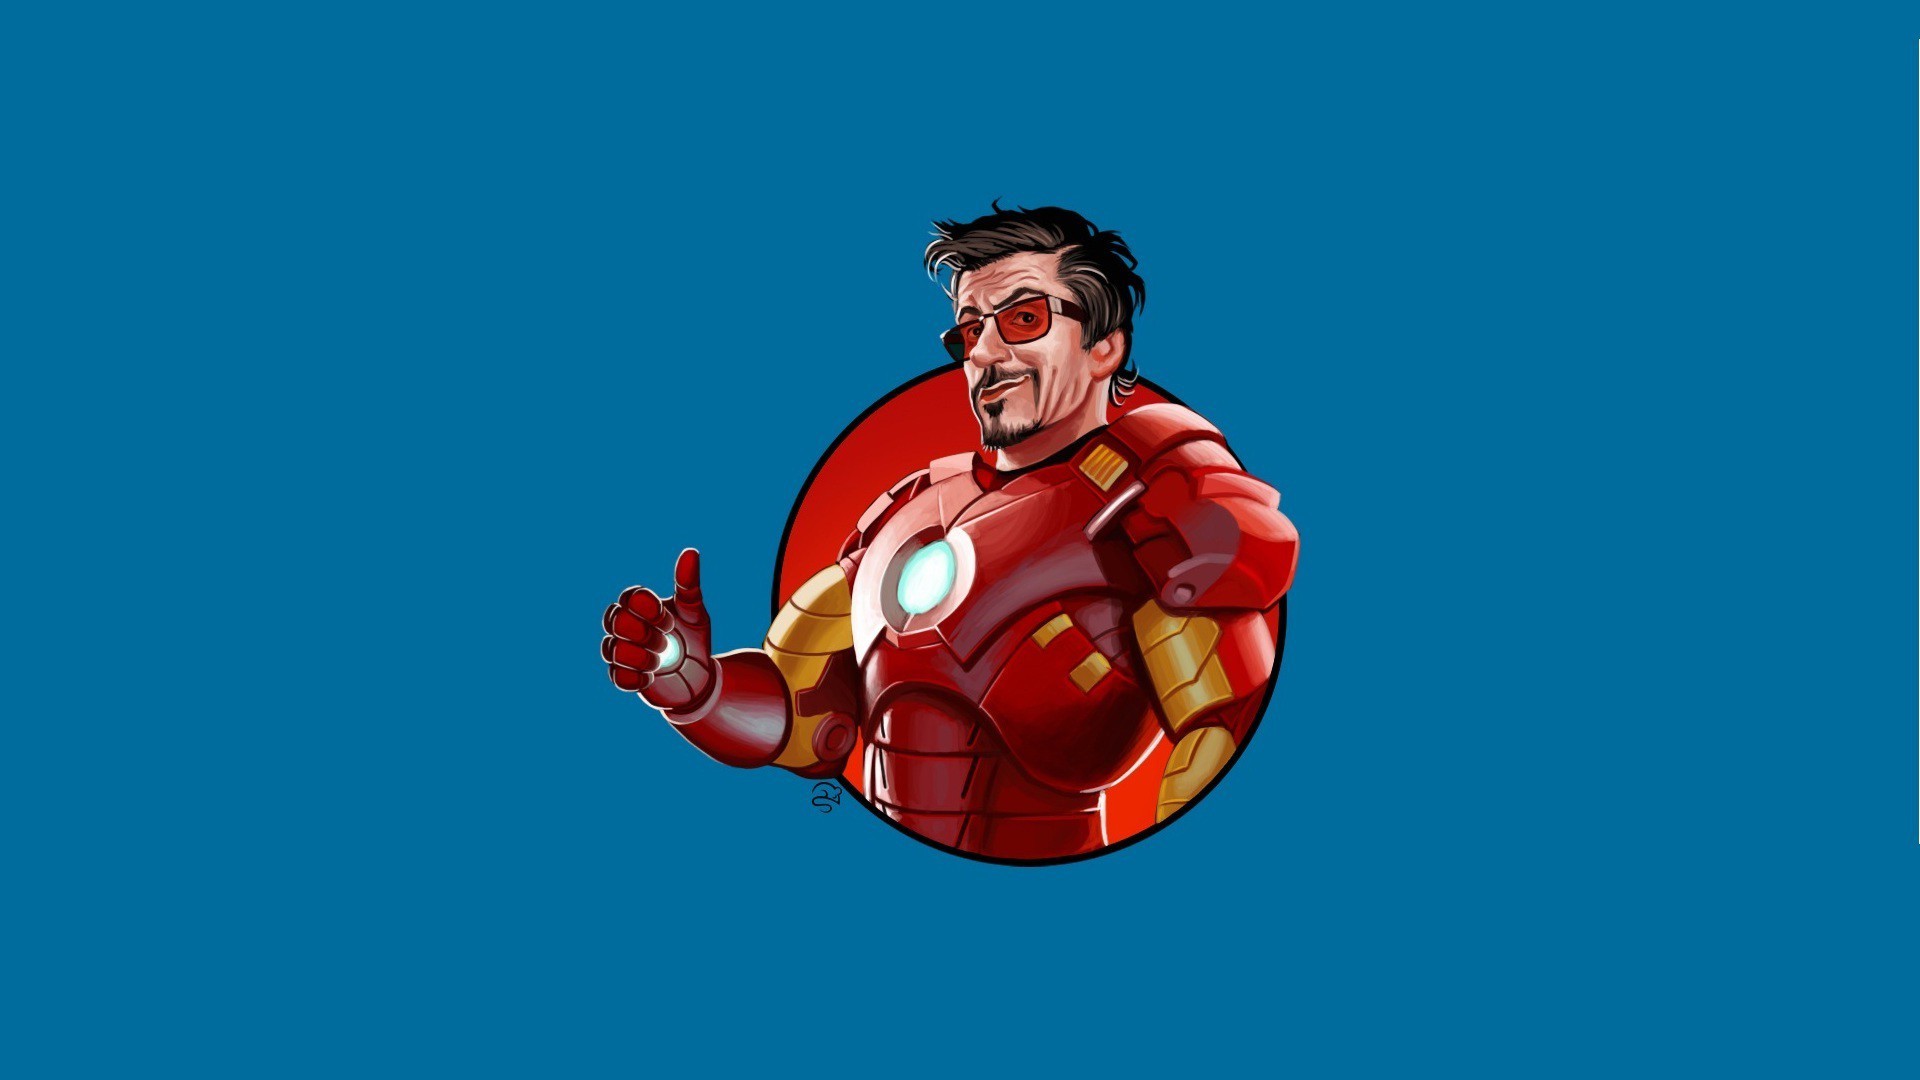 1920x1080 Minimalistic Iron Man sunglasses Tony Stark thumbs up blue background  wallpaper |  | 61173 | WallpaperUP